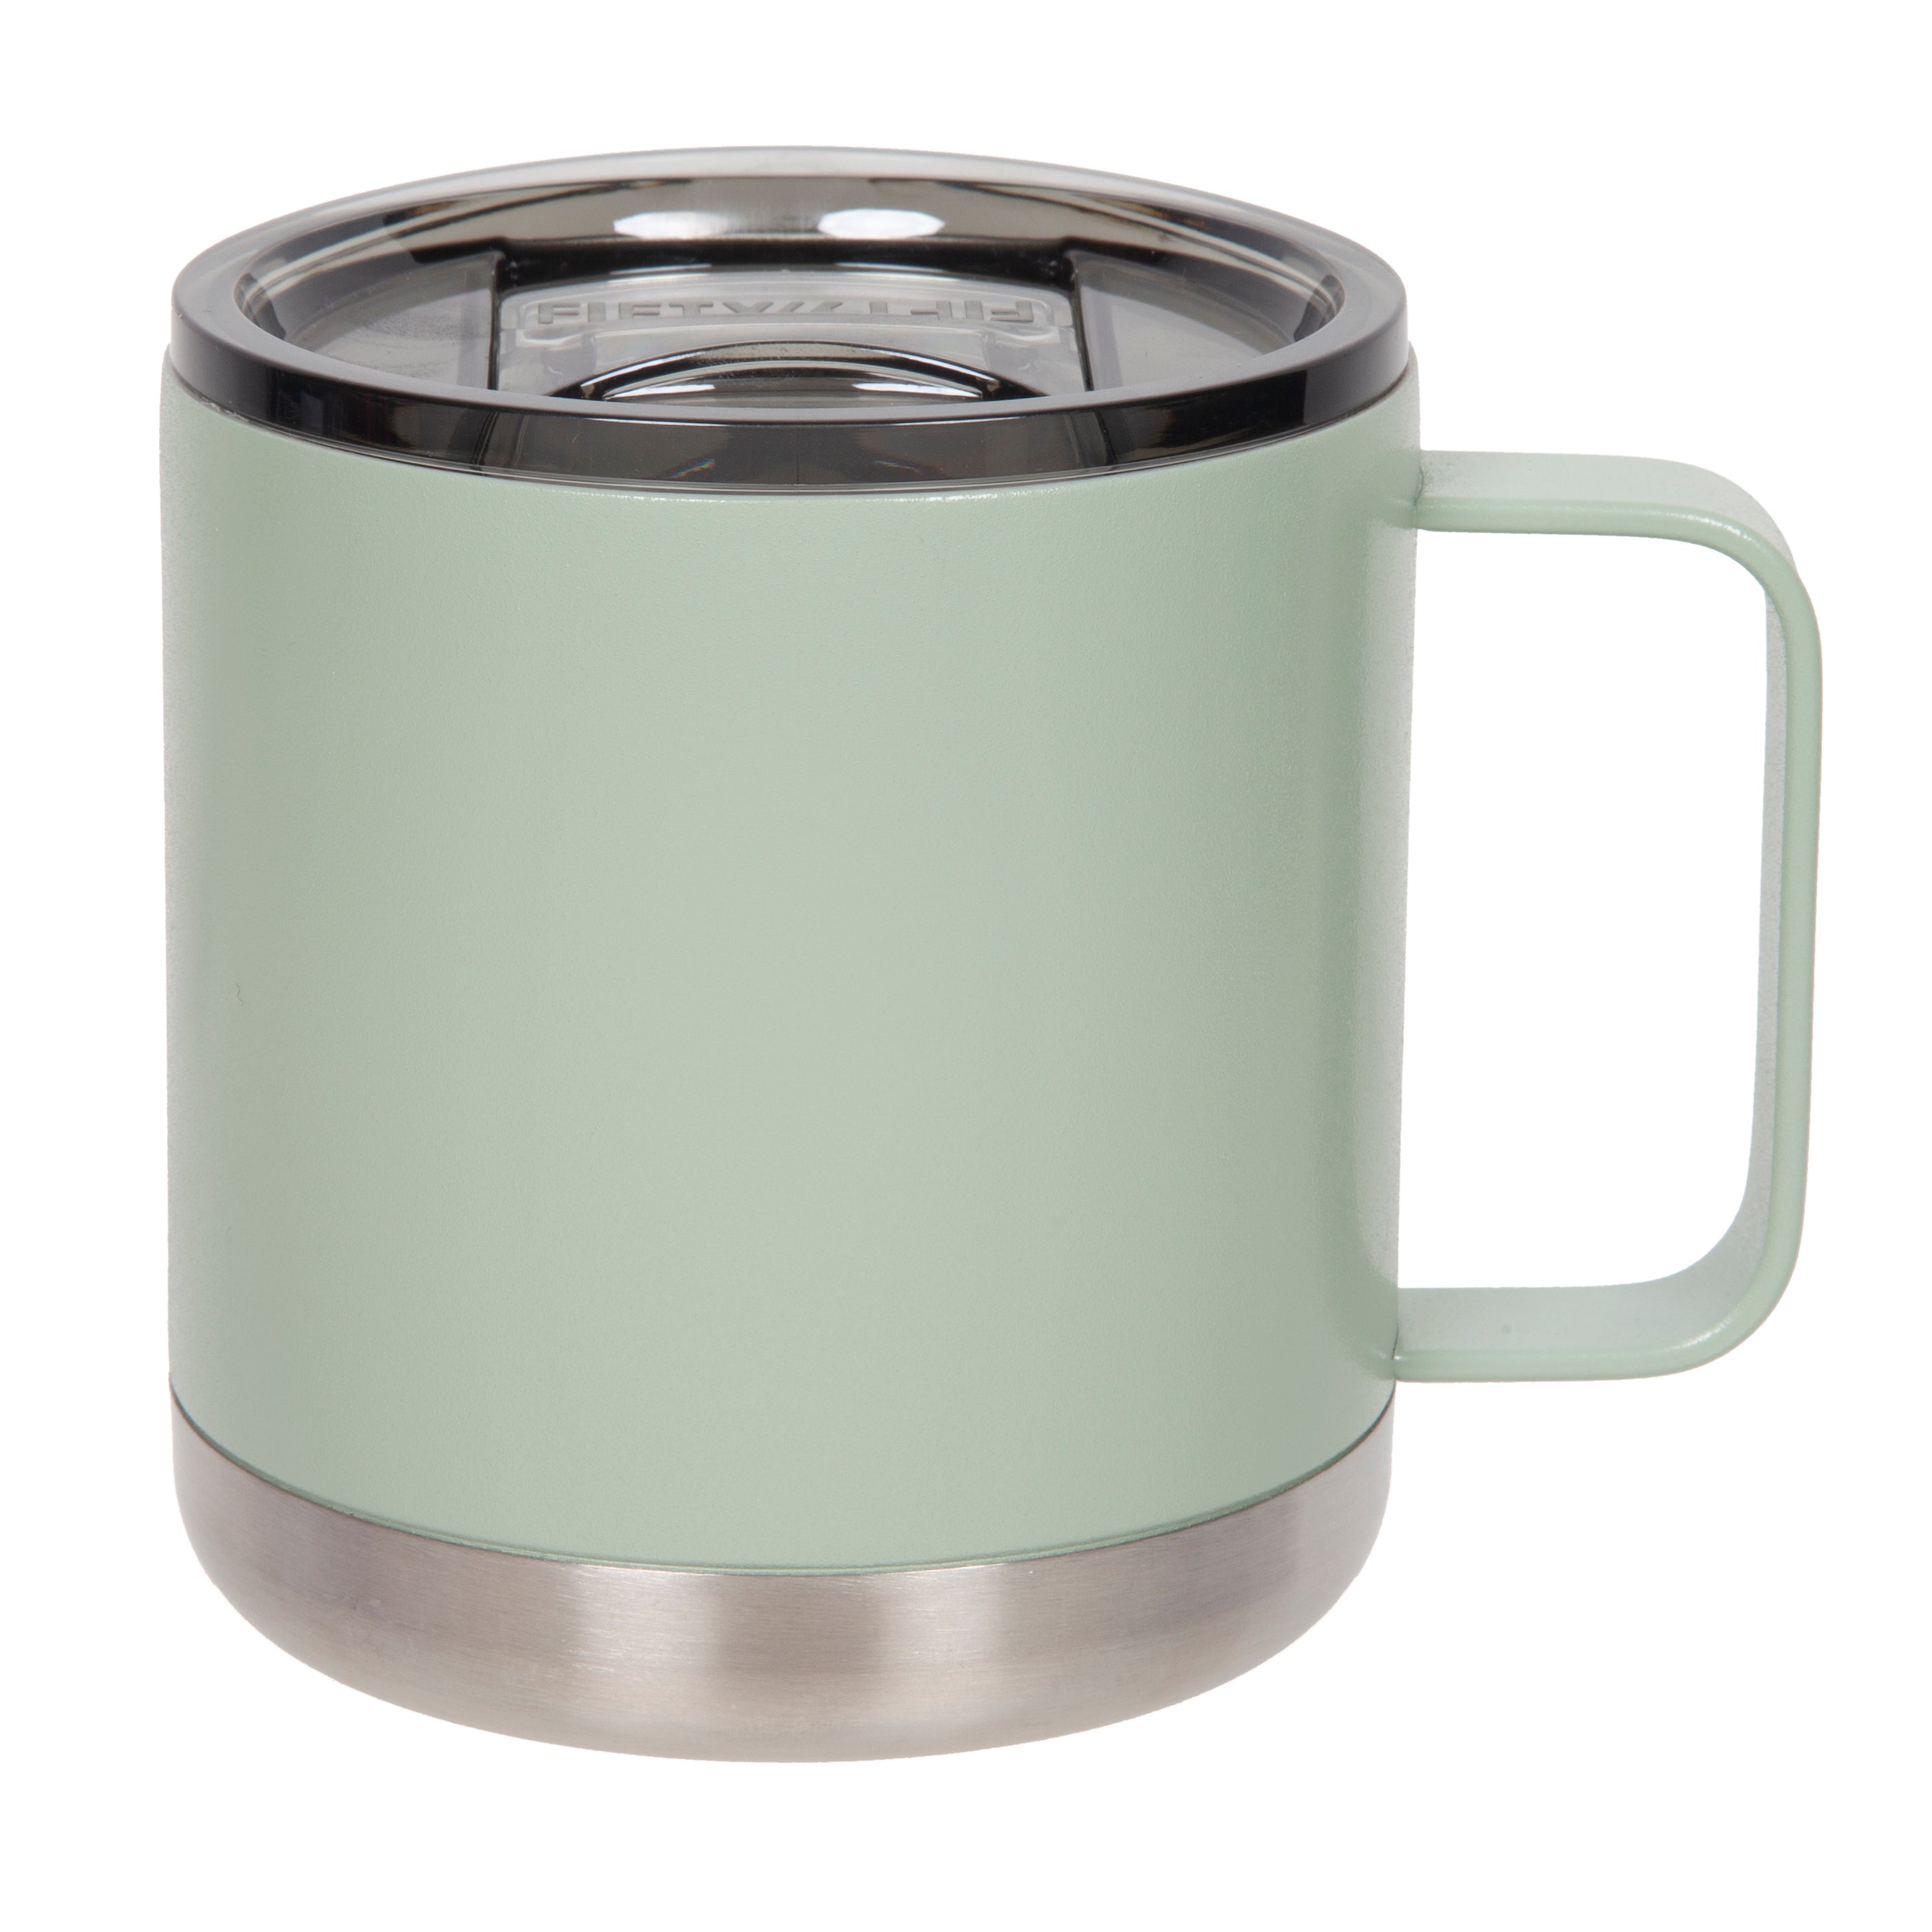 Double Wall Coffee Mug Stainless Steel Insulated Travel 14 Oz Keep Warm New